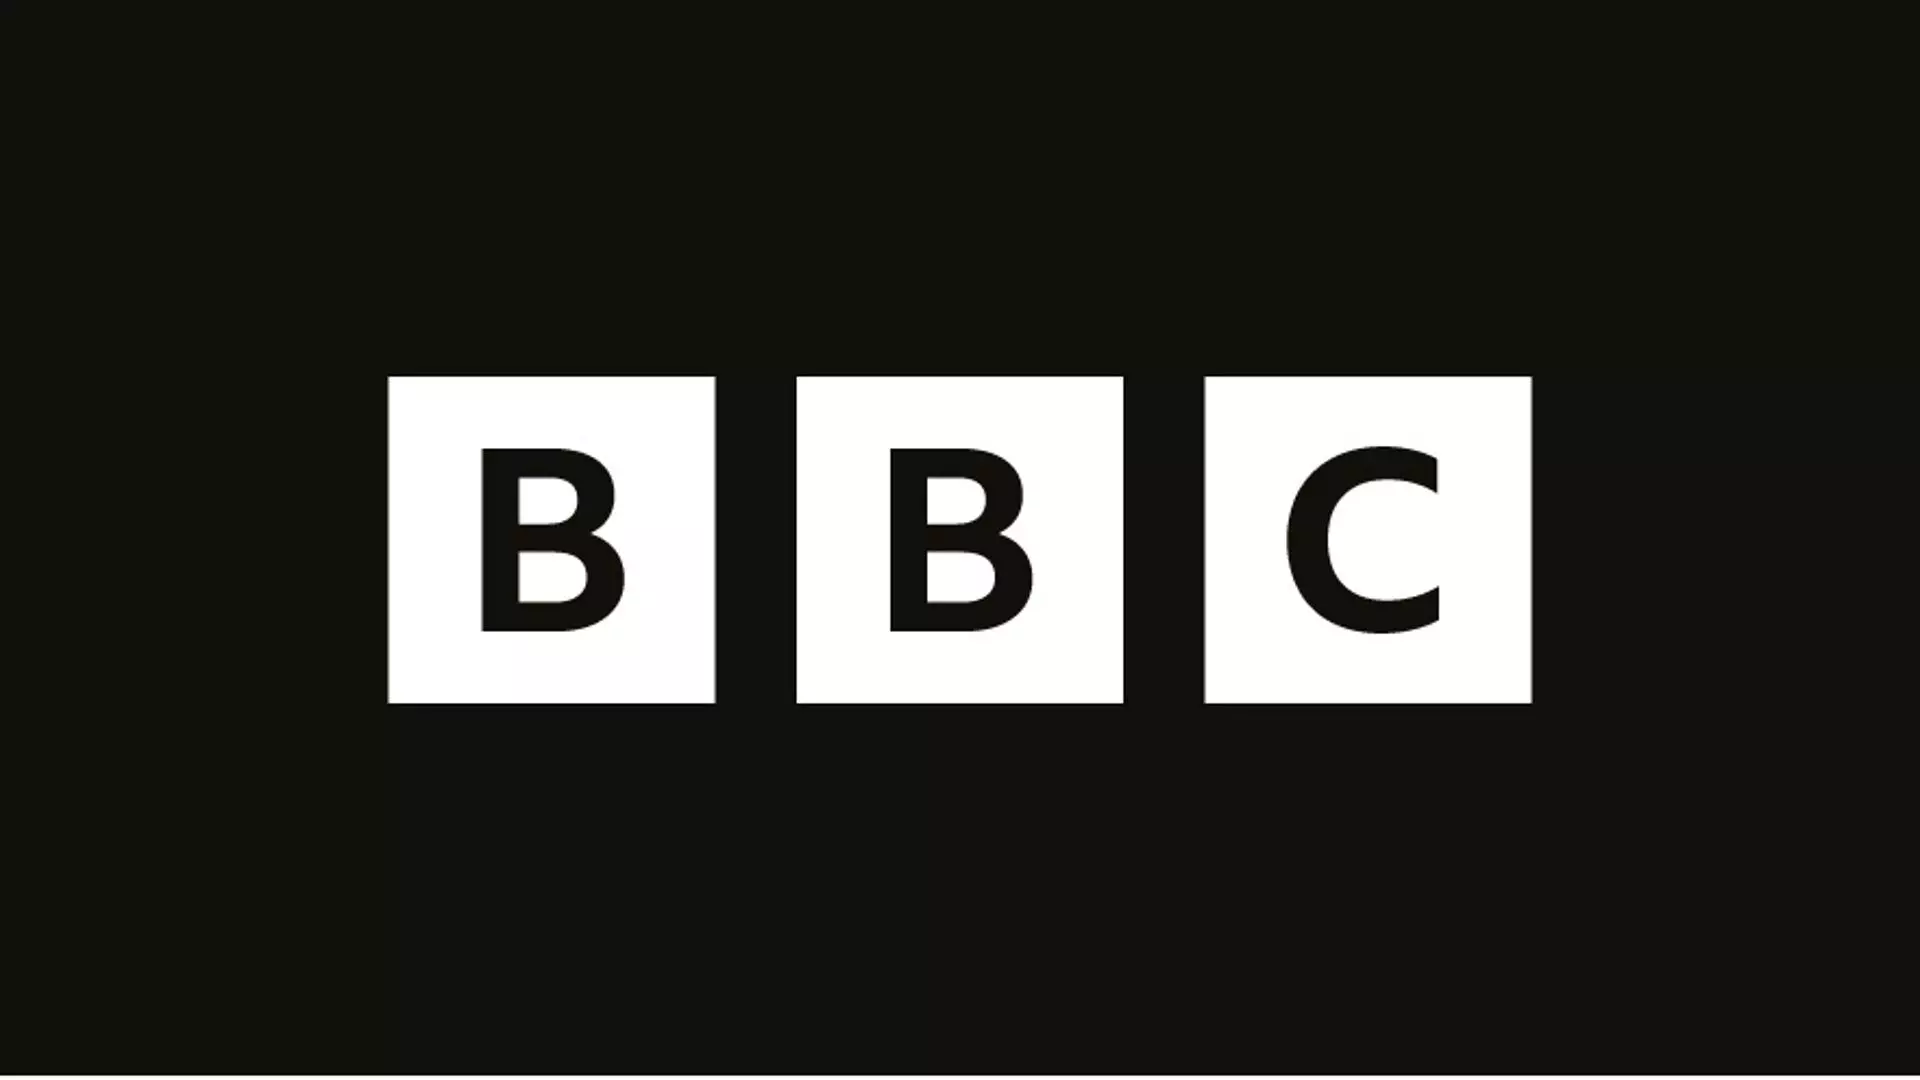 UK Foreign Secretary James Cleverly raises BBC tax issue with EAM   S Jaishankar